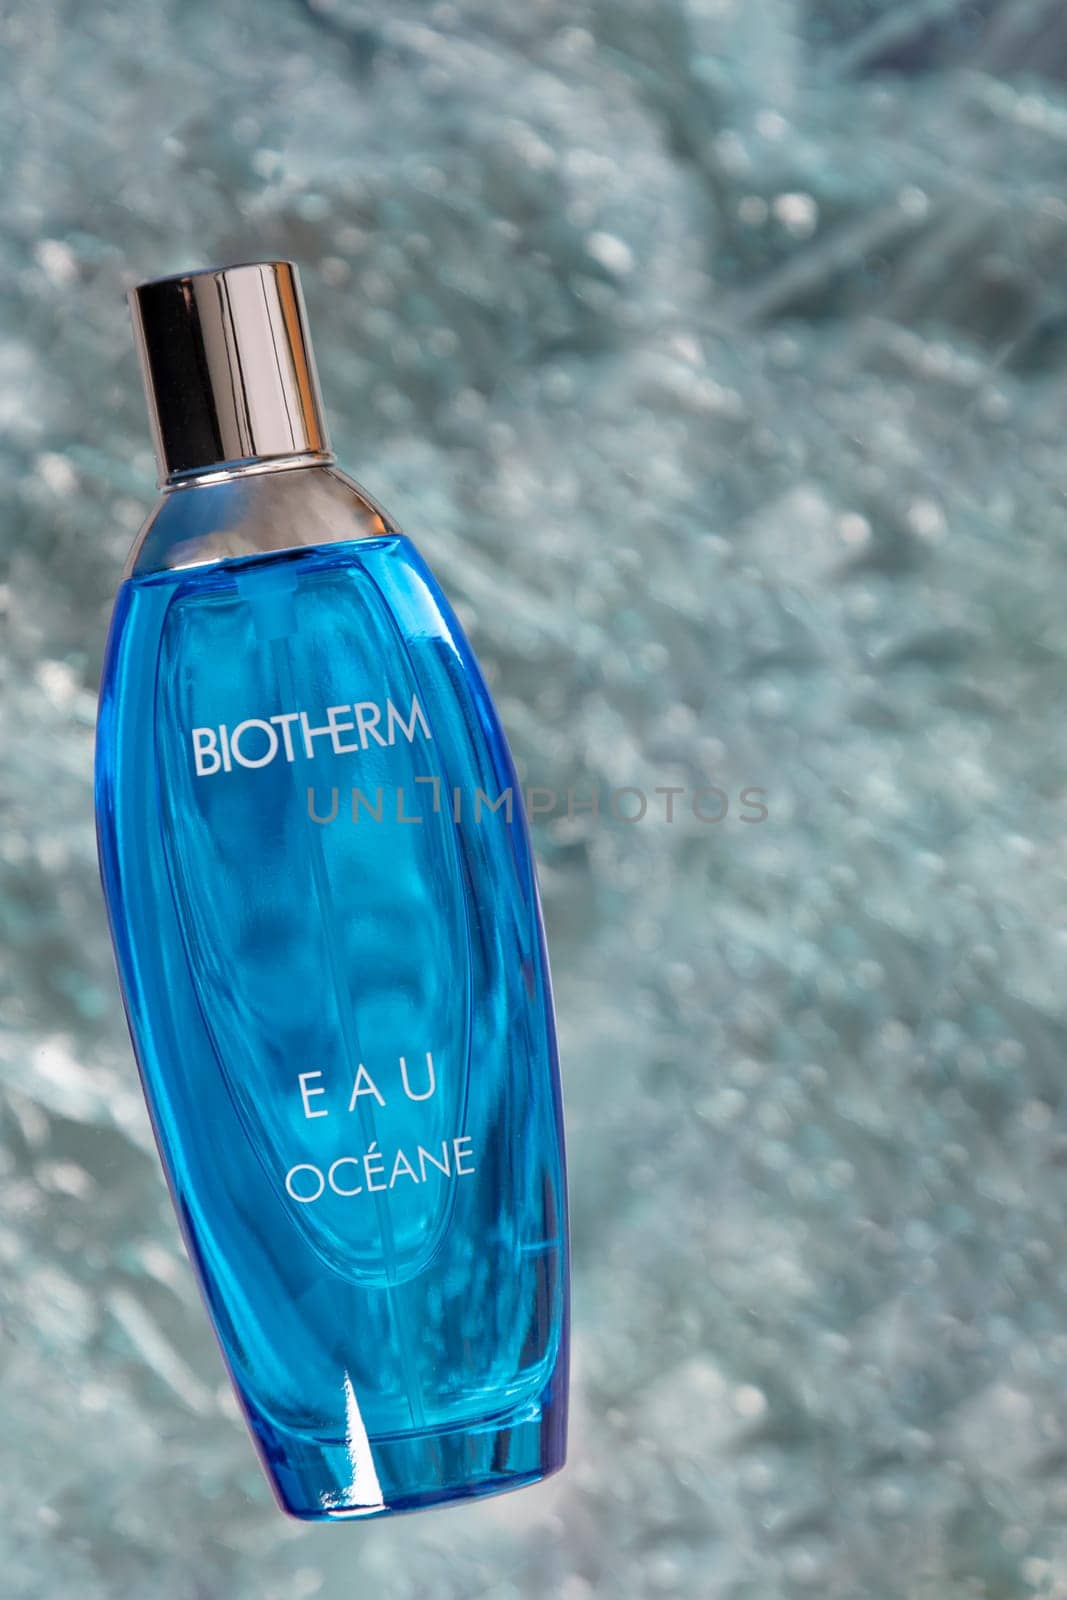 Biotherm Eau Oceane, fresh aquatic scents, Swedish perfume and cosmetics brand, romantic, As,Belgium, Juny 28, 2022 by KaterinaDalemans